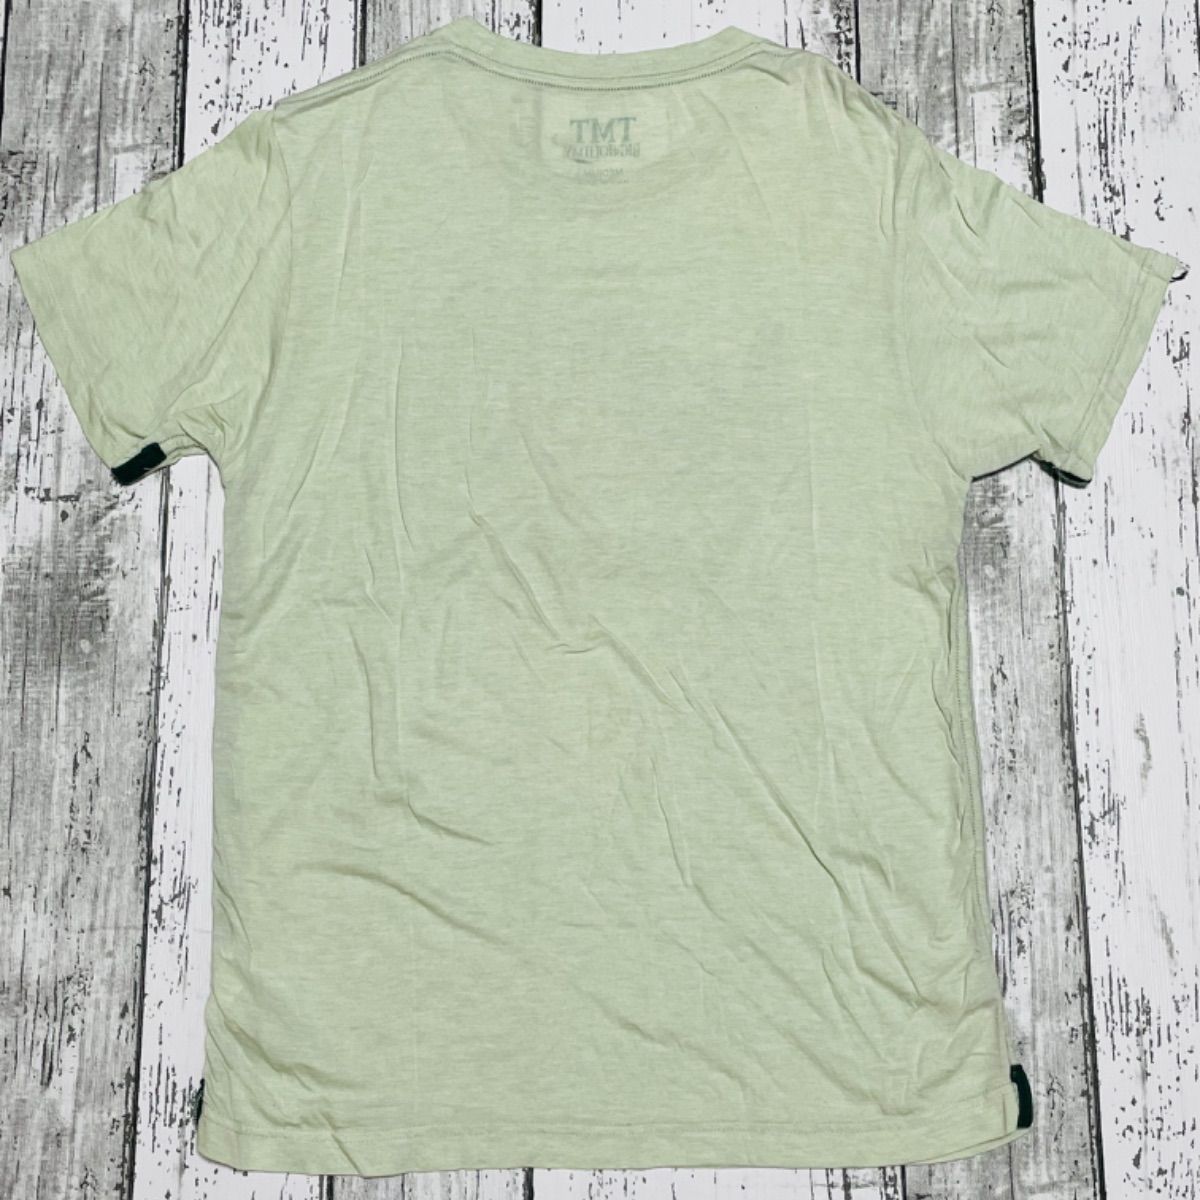 SALE】 セール TMT Tシャツ人気半袖 ライムグリーン M サーフ系 - メルカリ